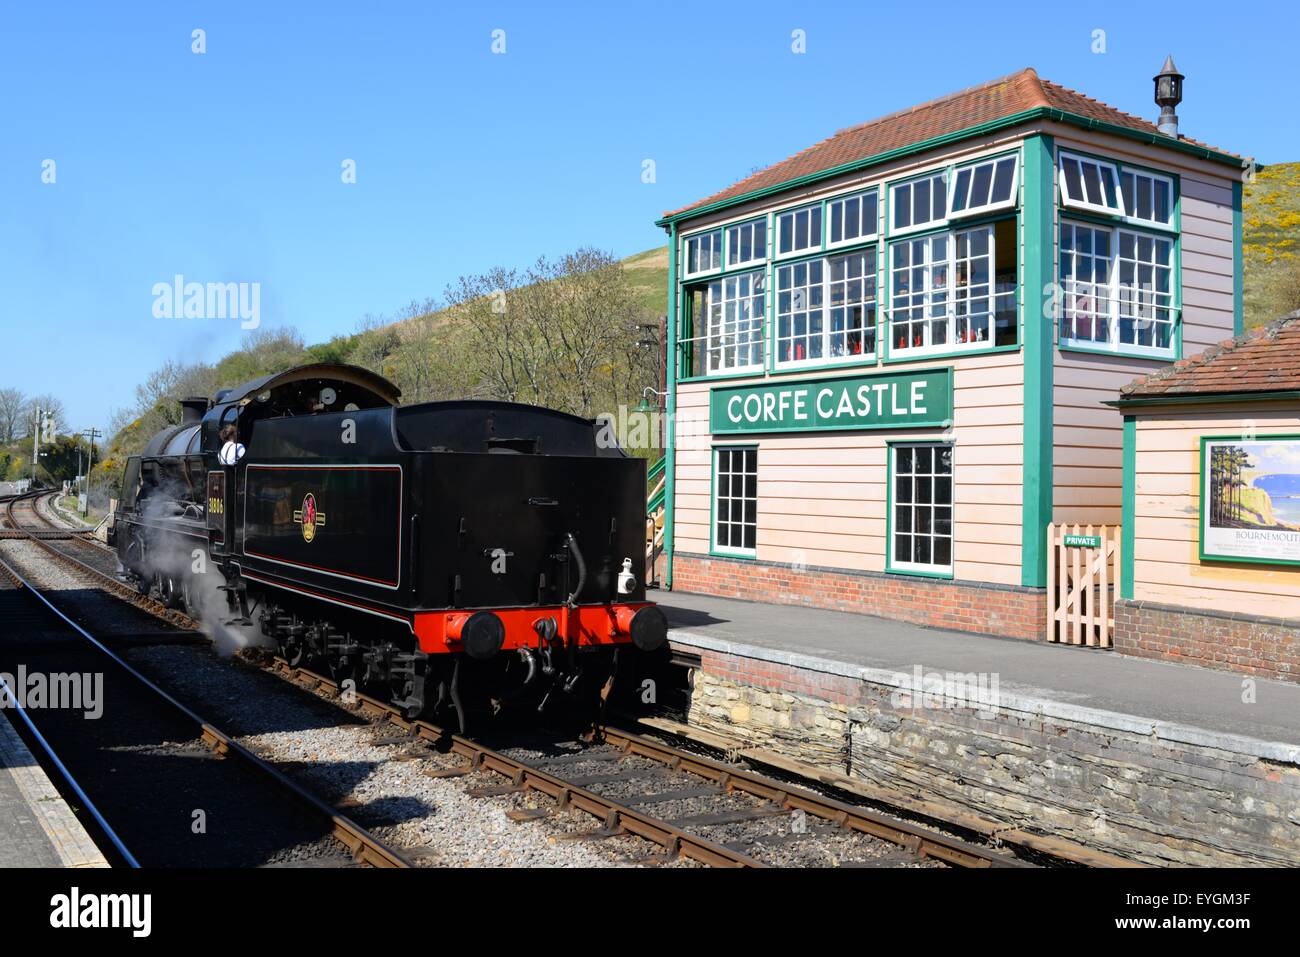 Corfe Caste station on the Swanage Heritage Railway. Stream train with signal box, Dorset, UK. Stock Photo